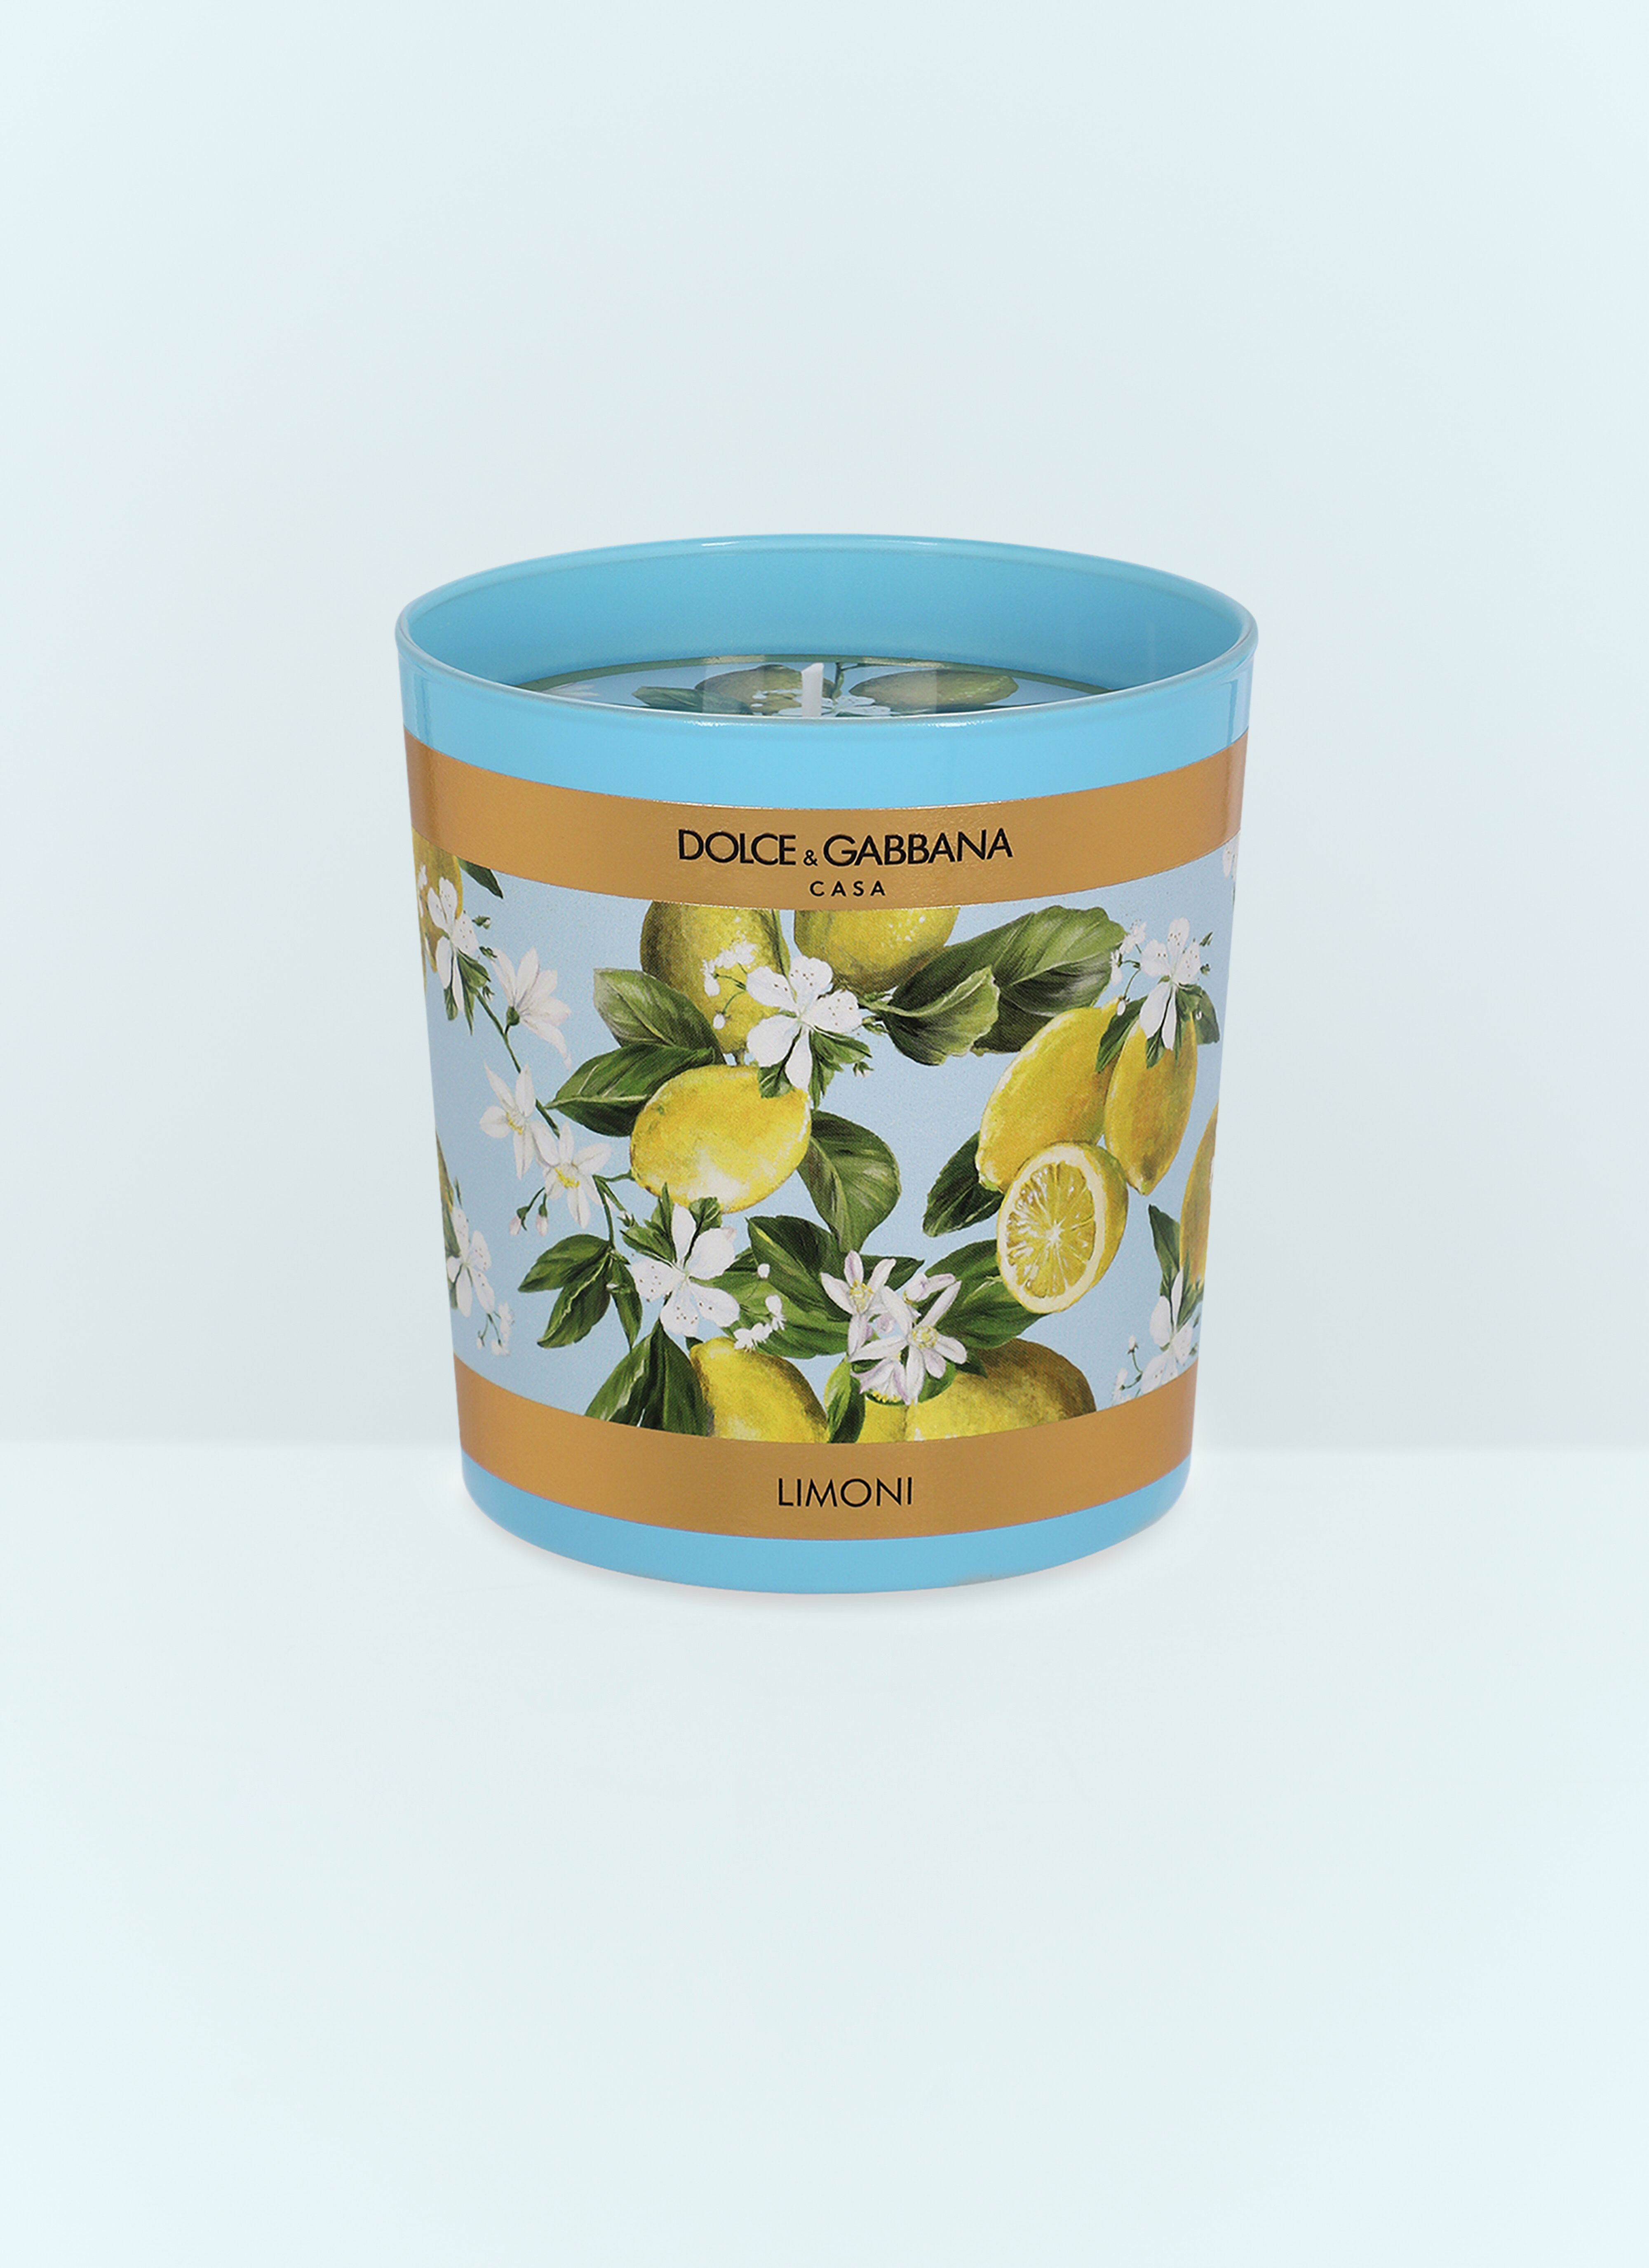 Dolce & Gabbana Casa Lemon Scented Candle Black wps0691219